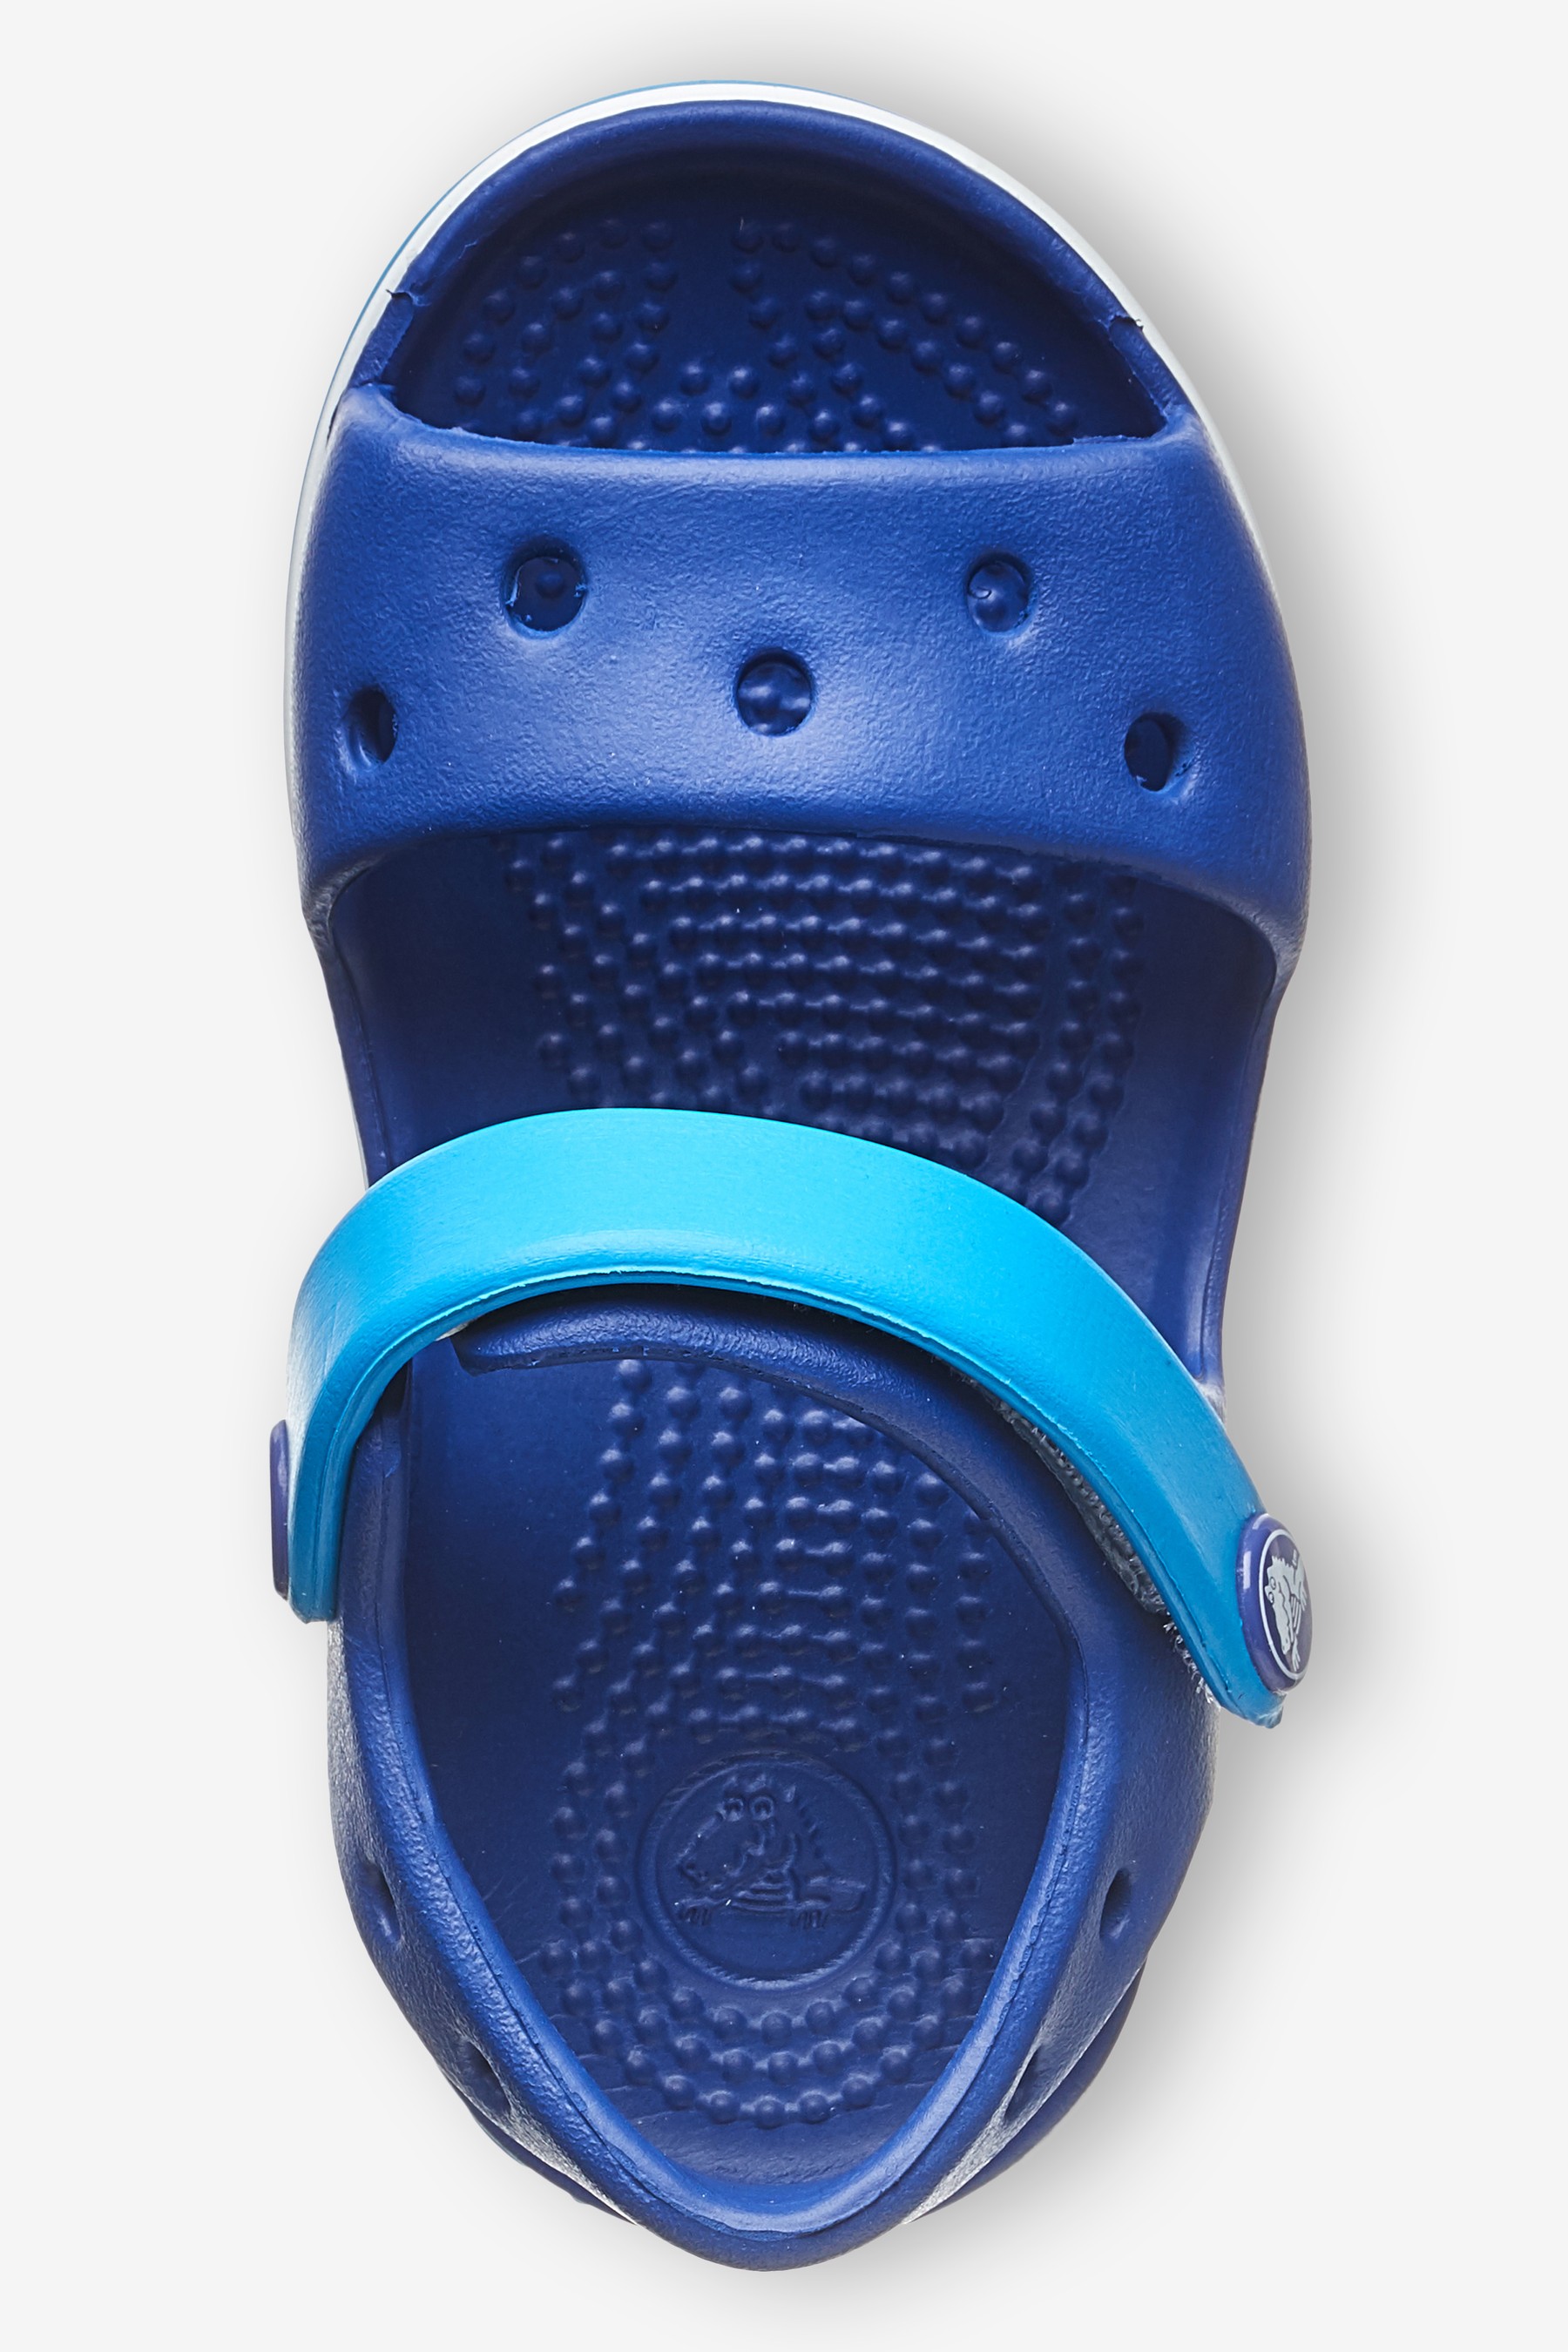 Crocs Crocband Sandals